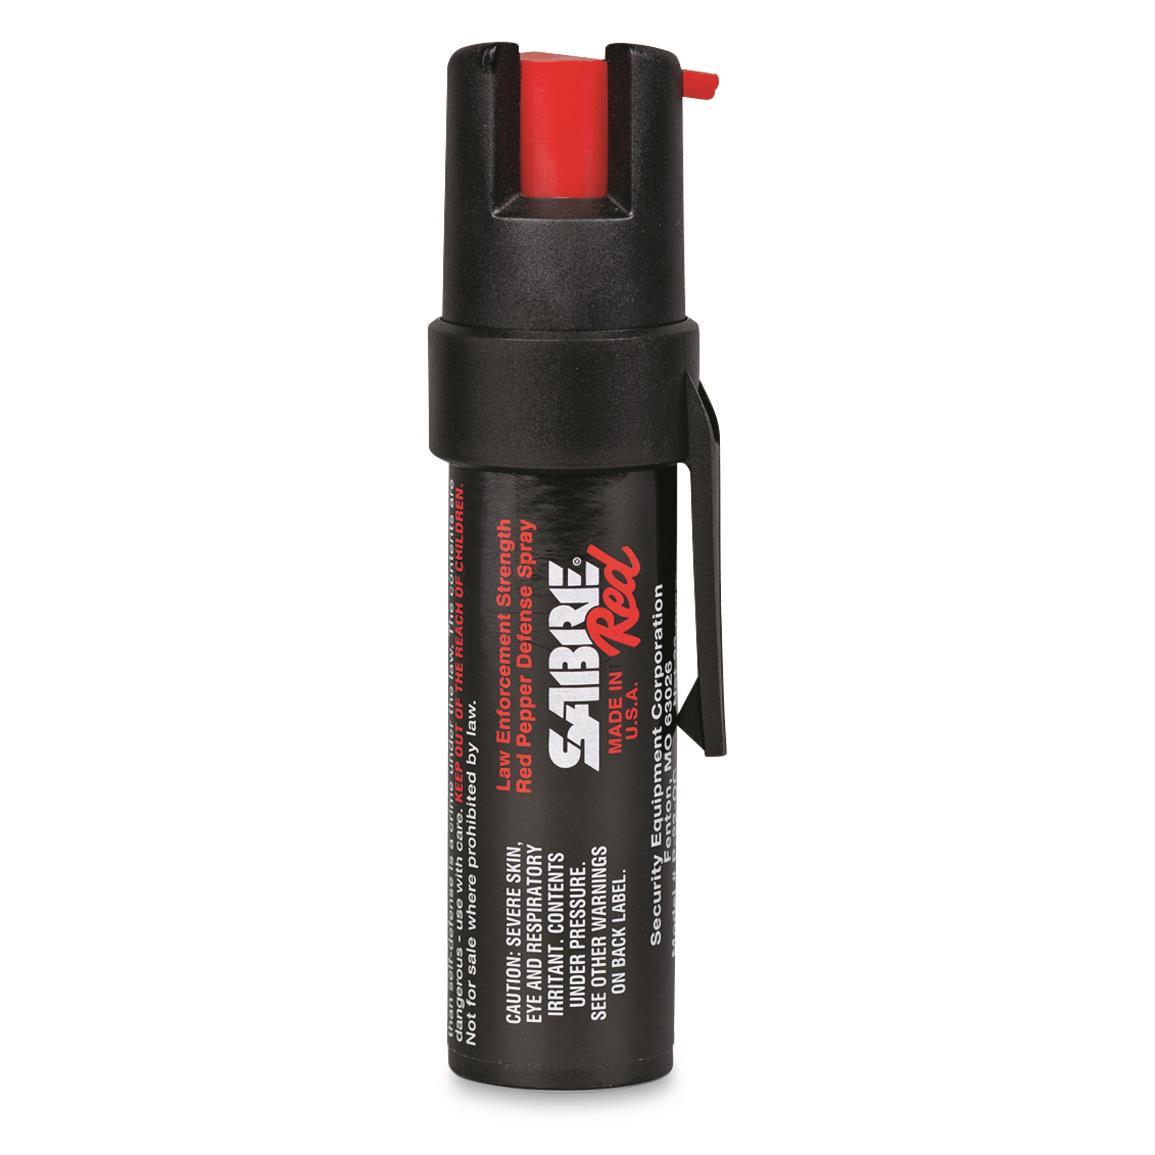 Sabre Self-Defense Kit with Pepper Spray and 3-in-1 Stun Gun